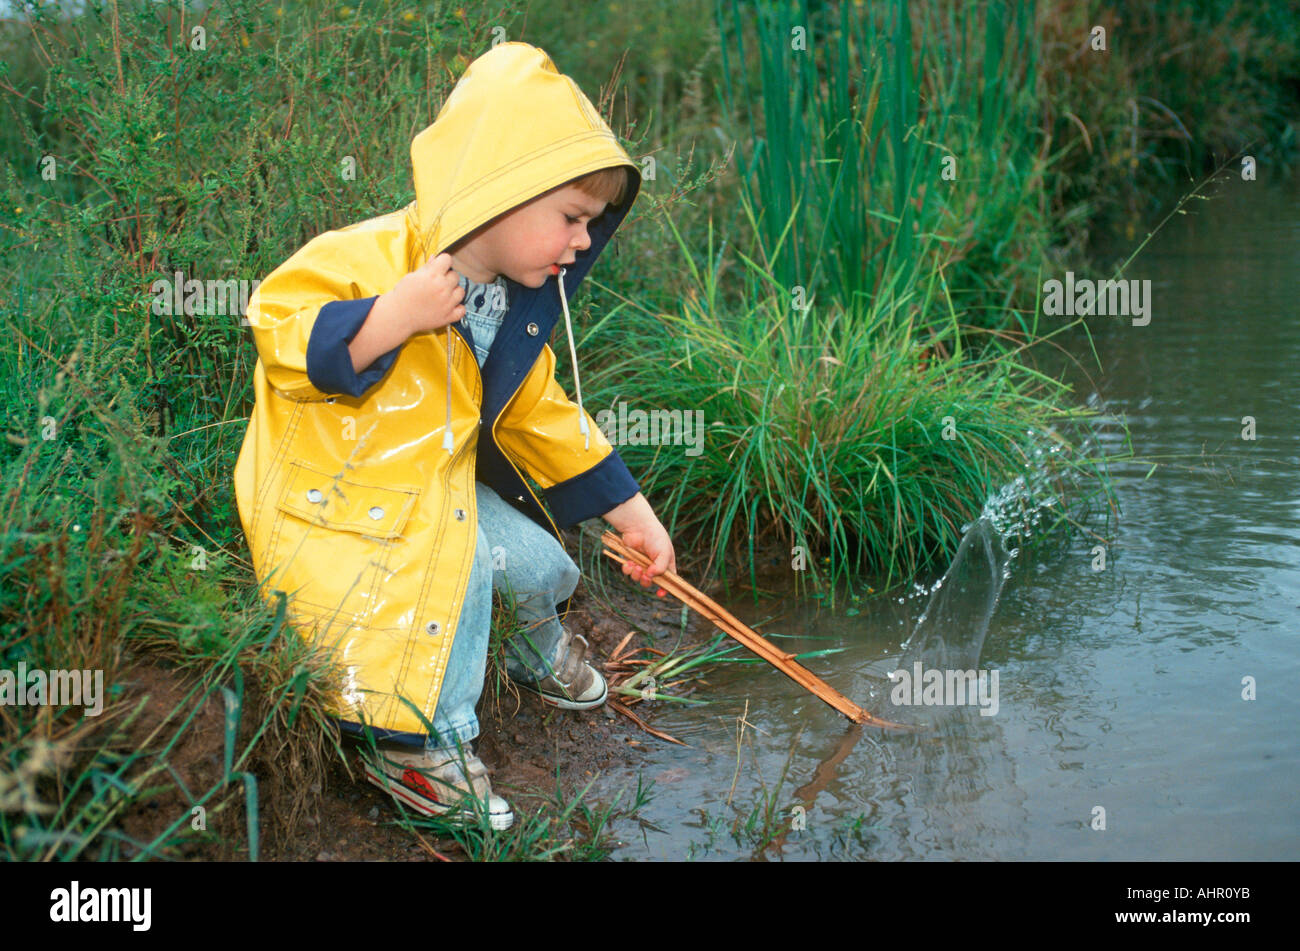 Kids rain gear rain coat hi-res stock photography and images - Alamy